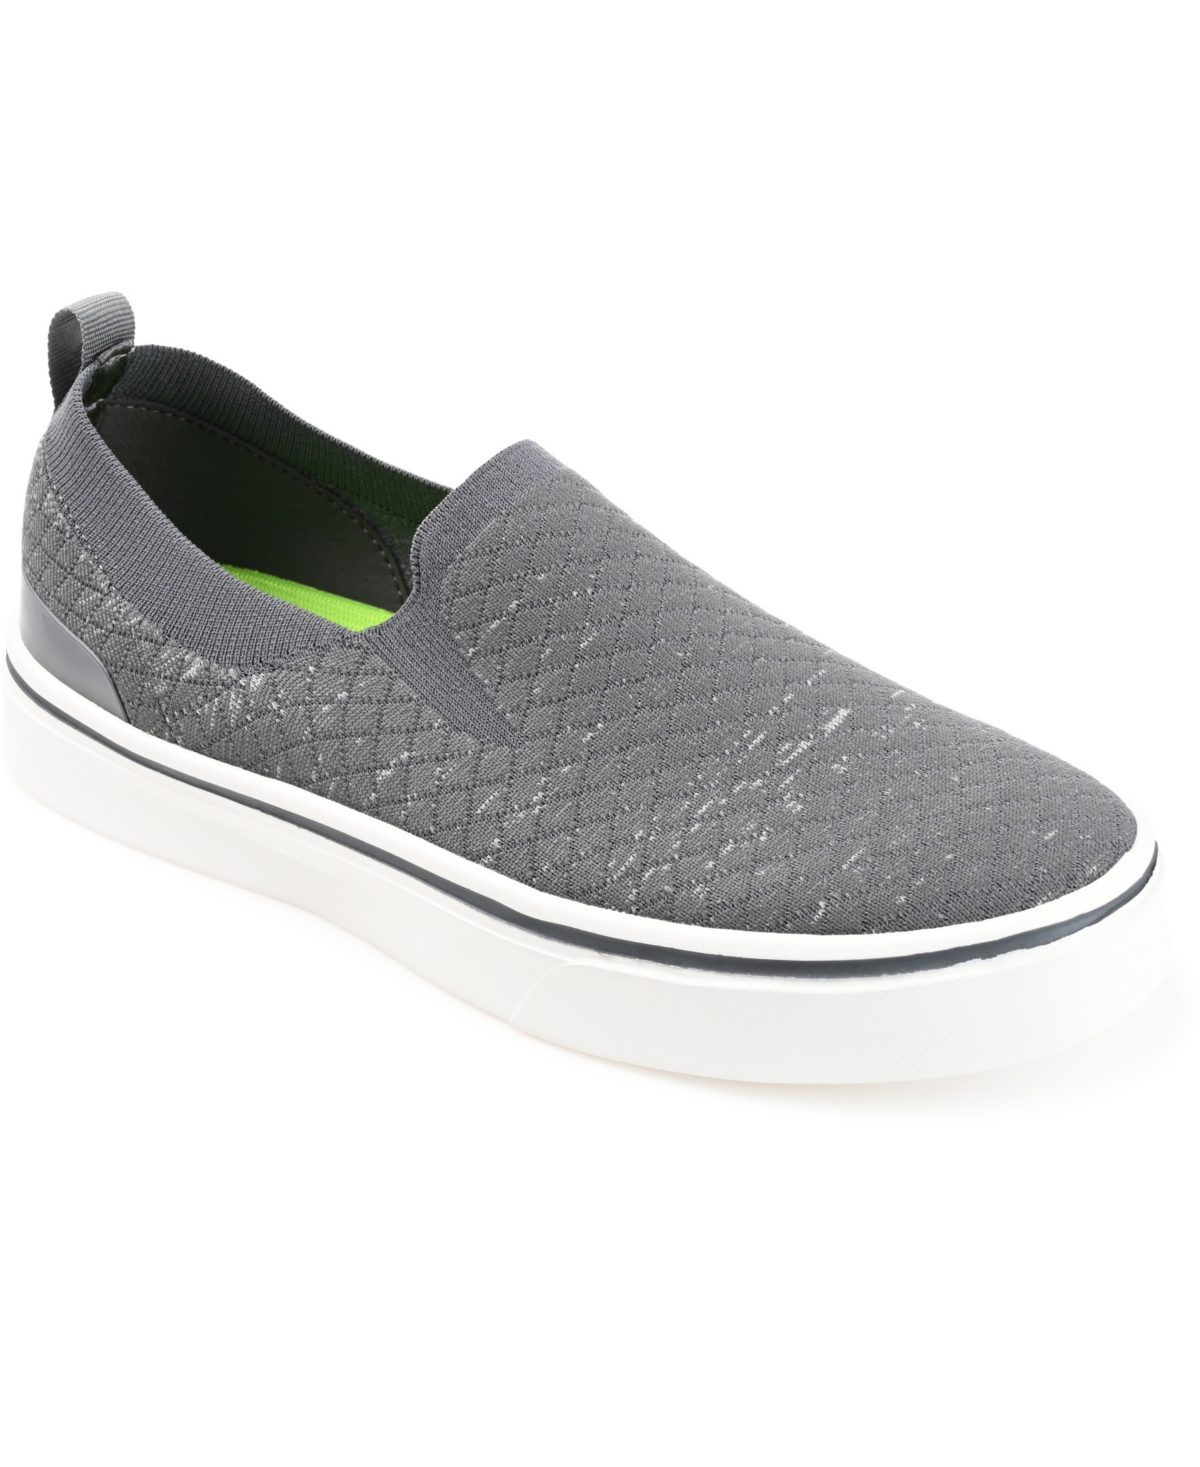 Men's Hamlin Casual Knit Slip-on Sneakers - Gray